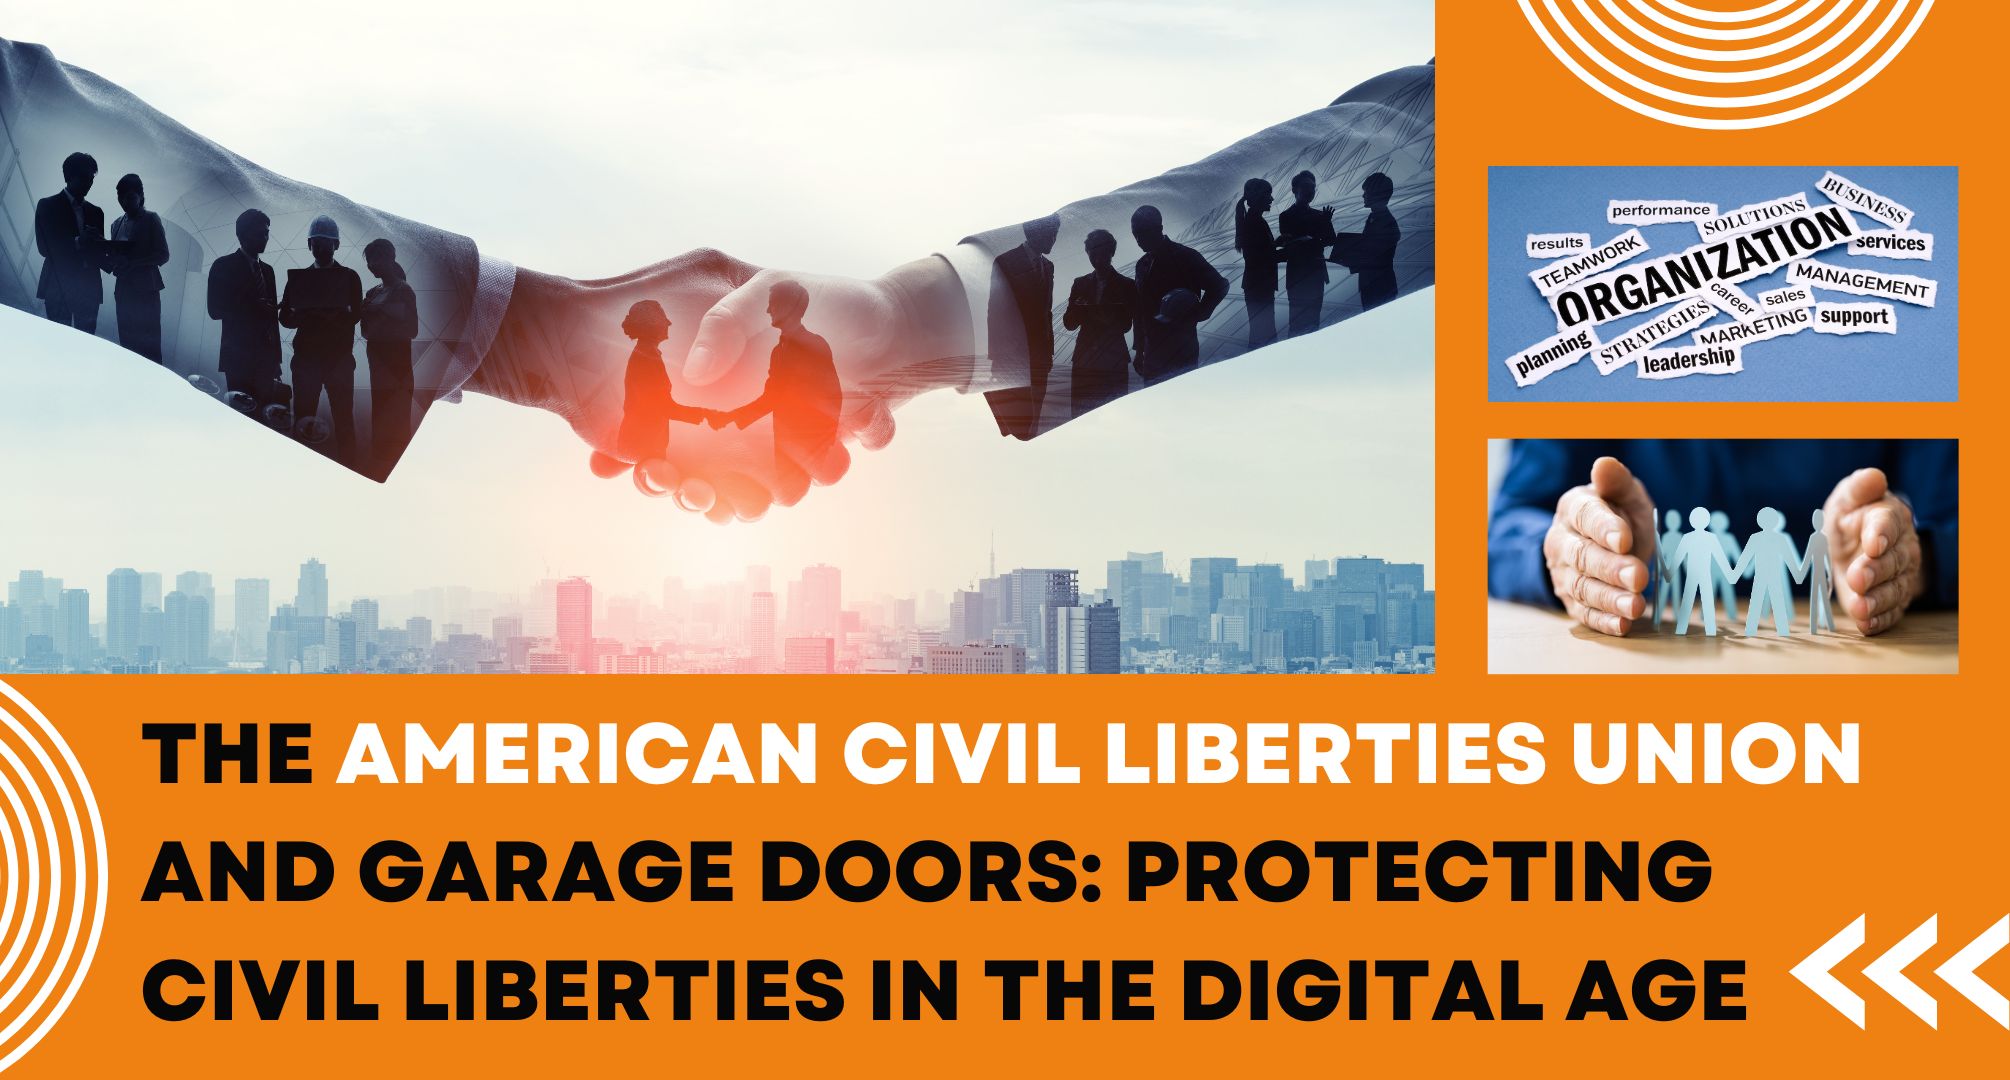 The American Civil Liberties Union and Garage Doors Protecting Civil Liberties in the Digital Age